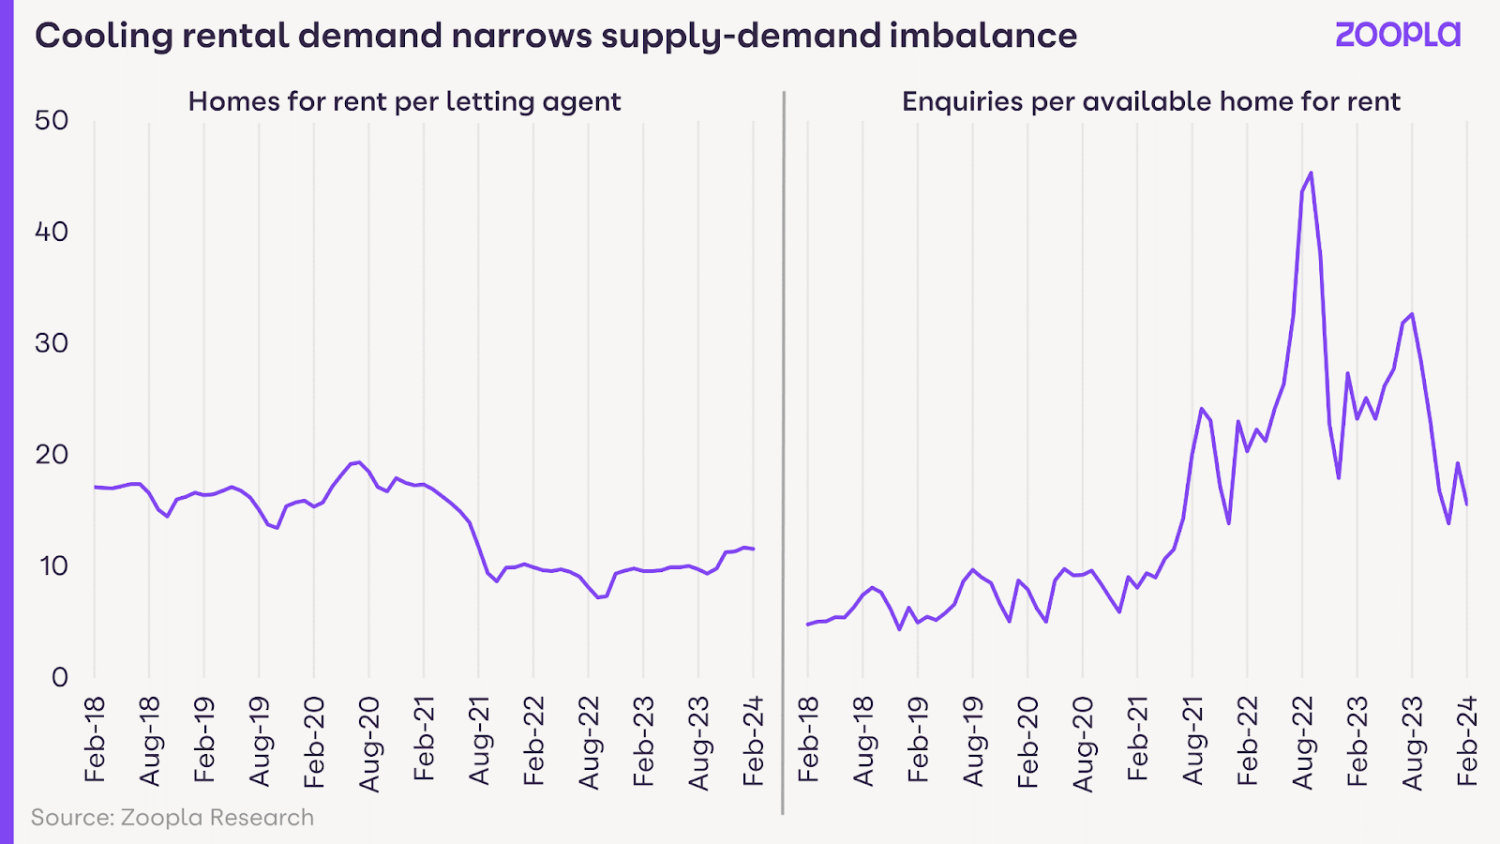 Graph showing cooling rental demand narrows supply-demand imbalance